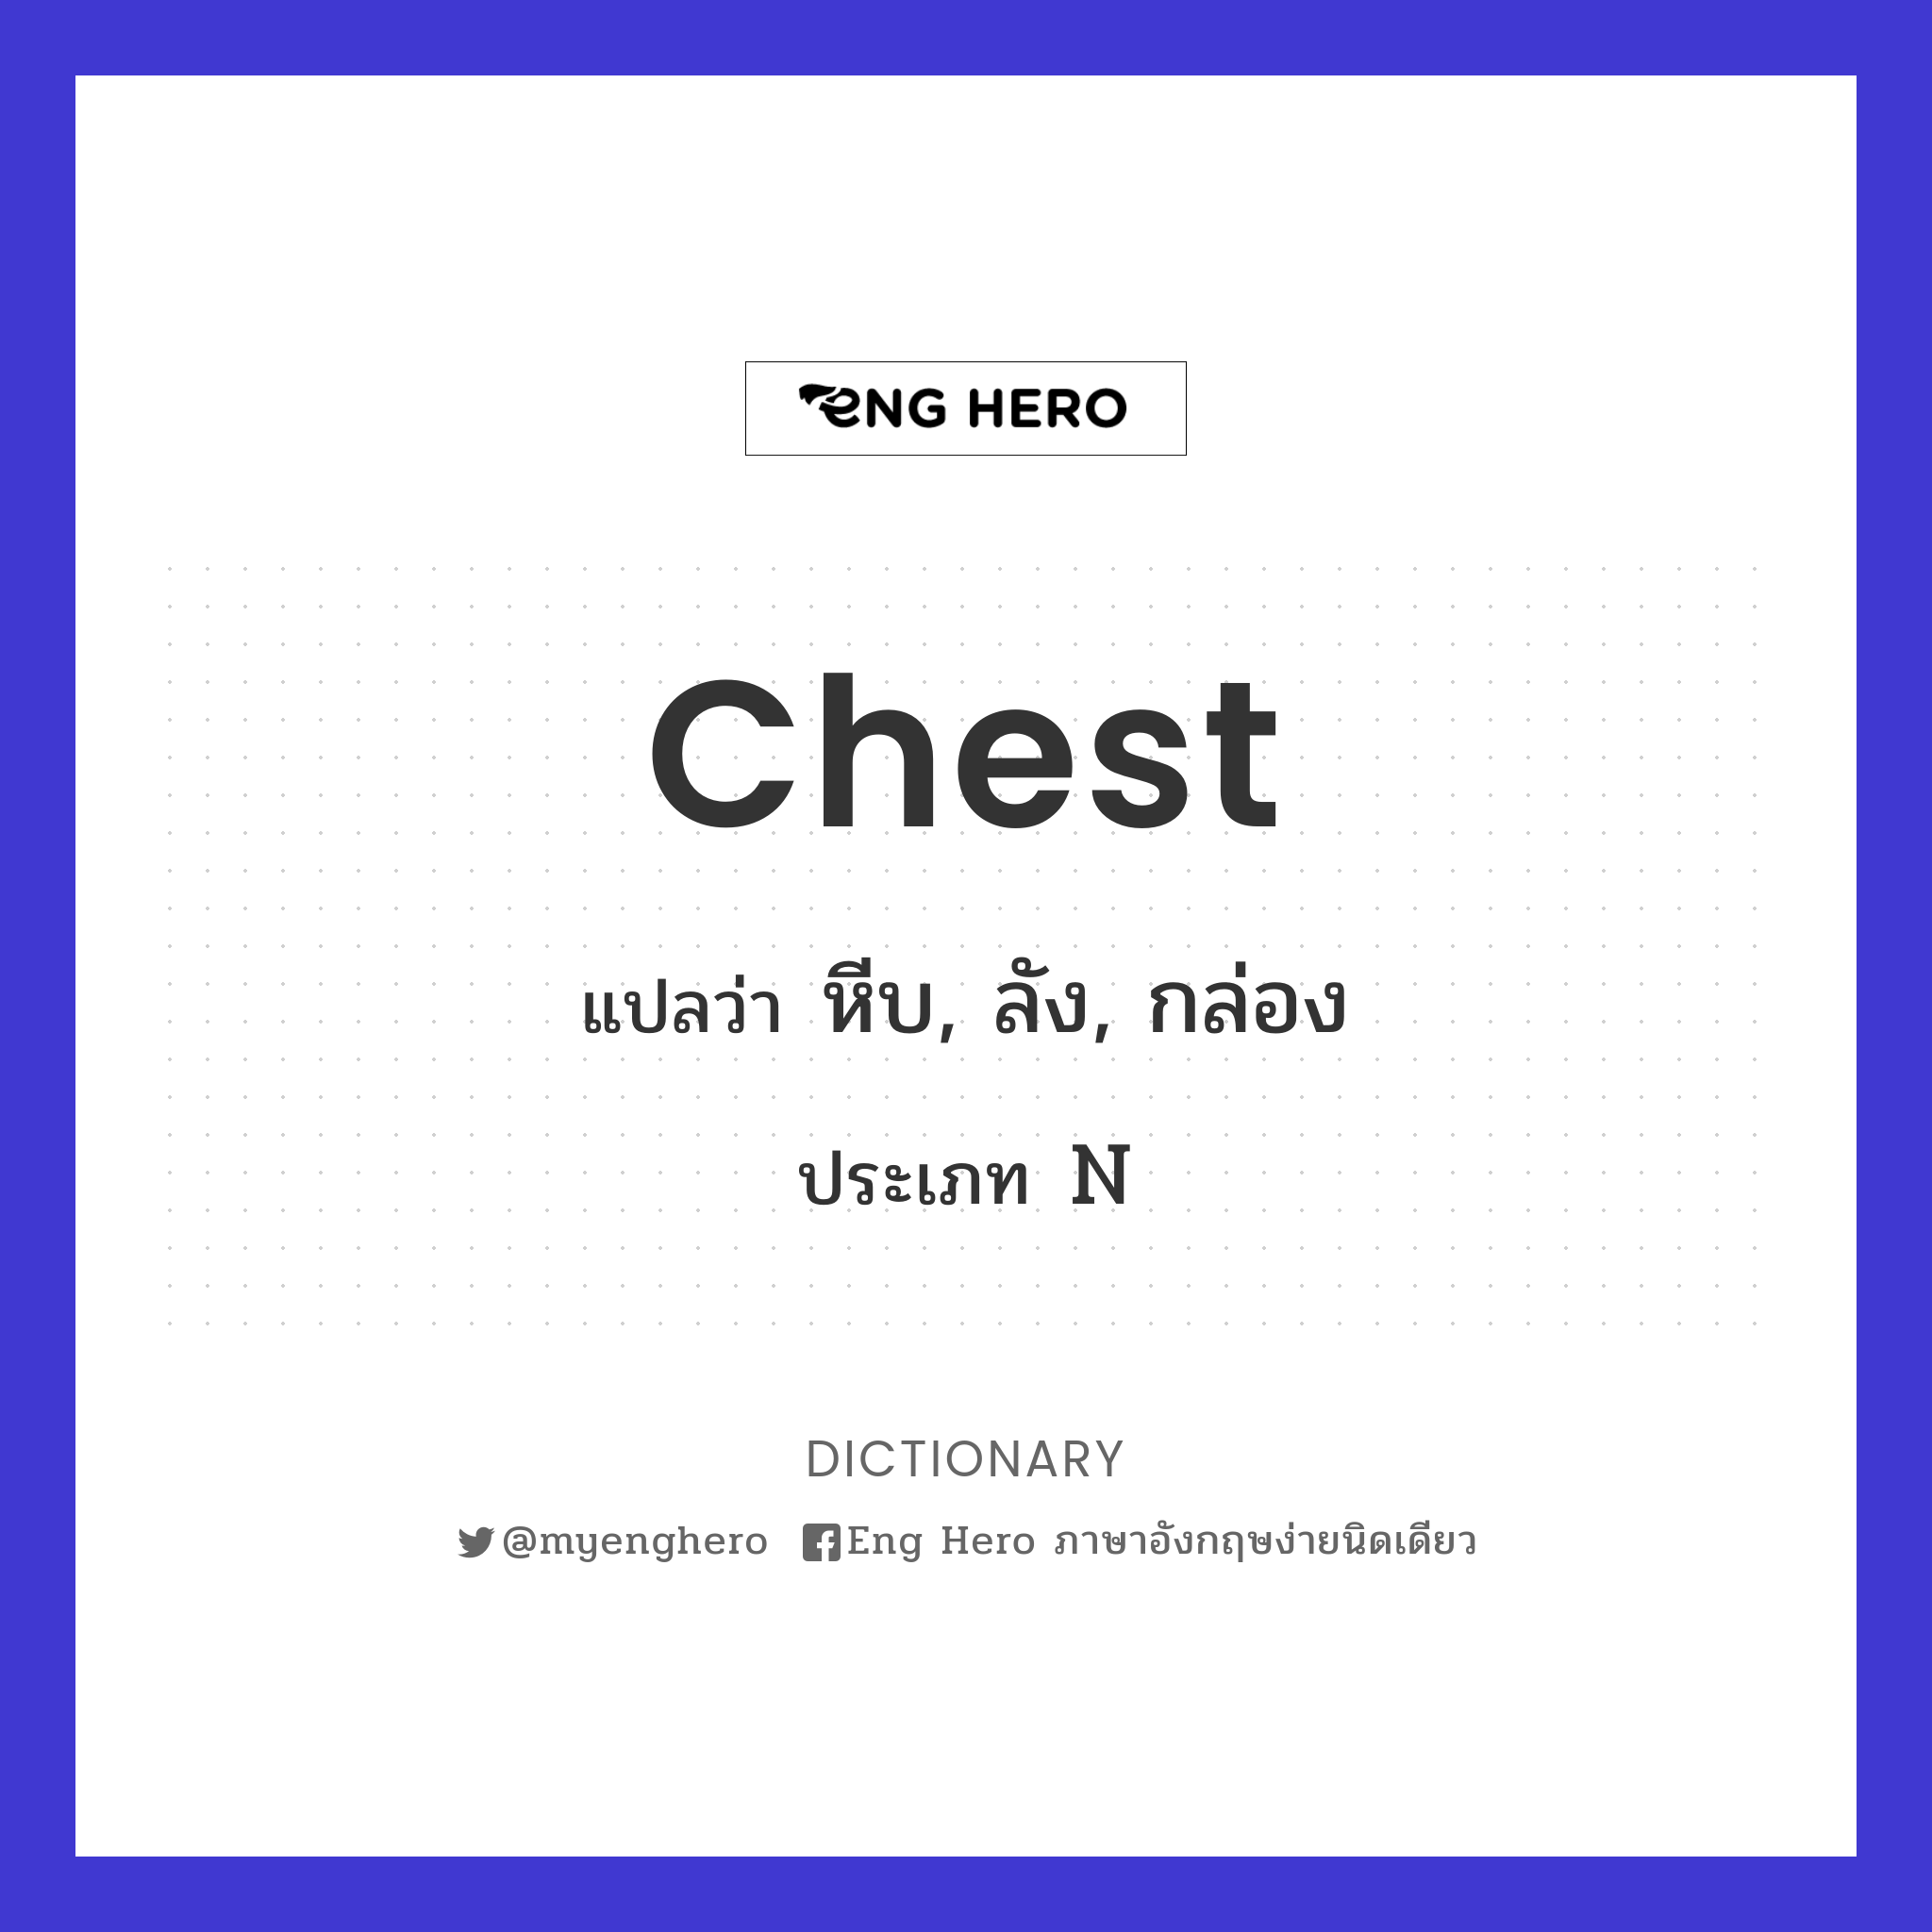 chest